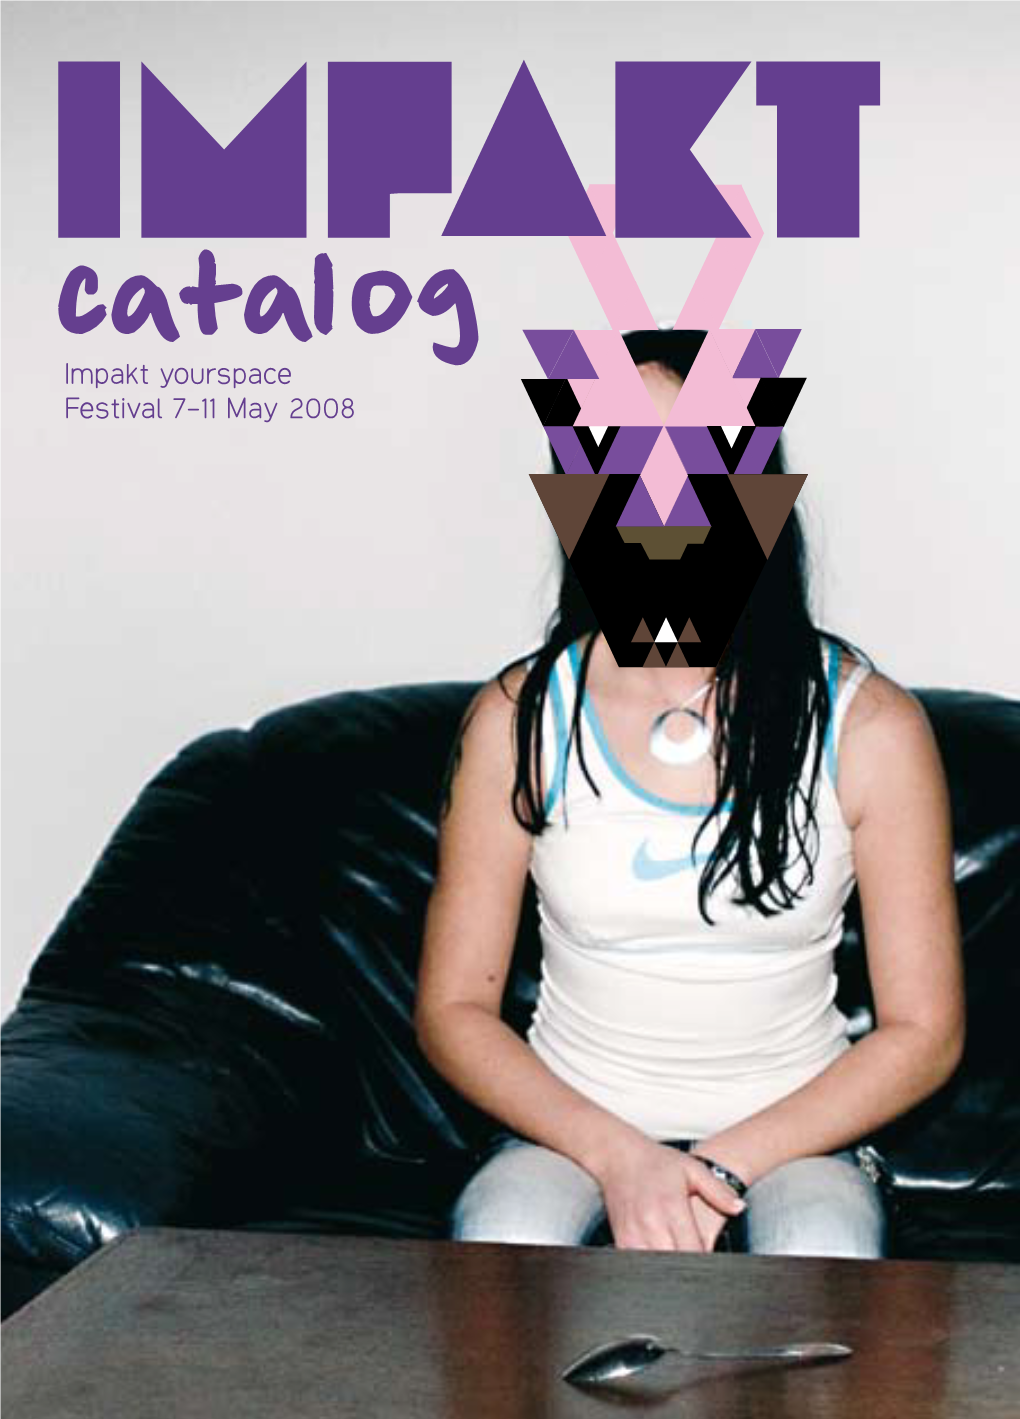 Catalog Impakt Yourspace Festival 7-11 May 2008